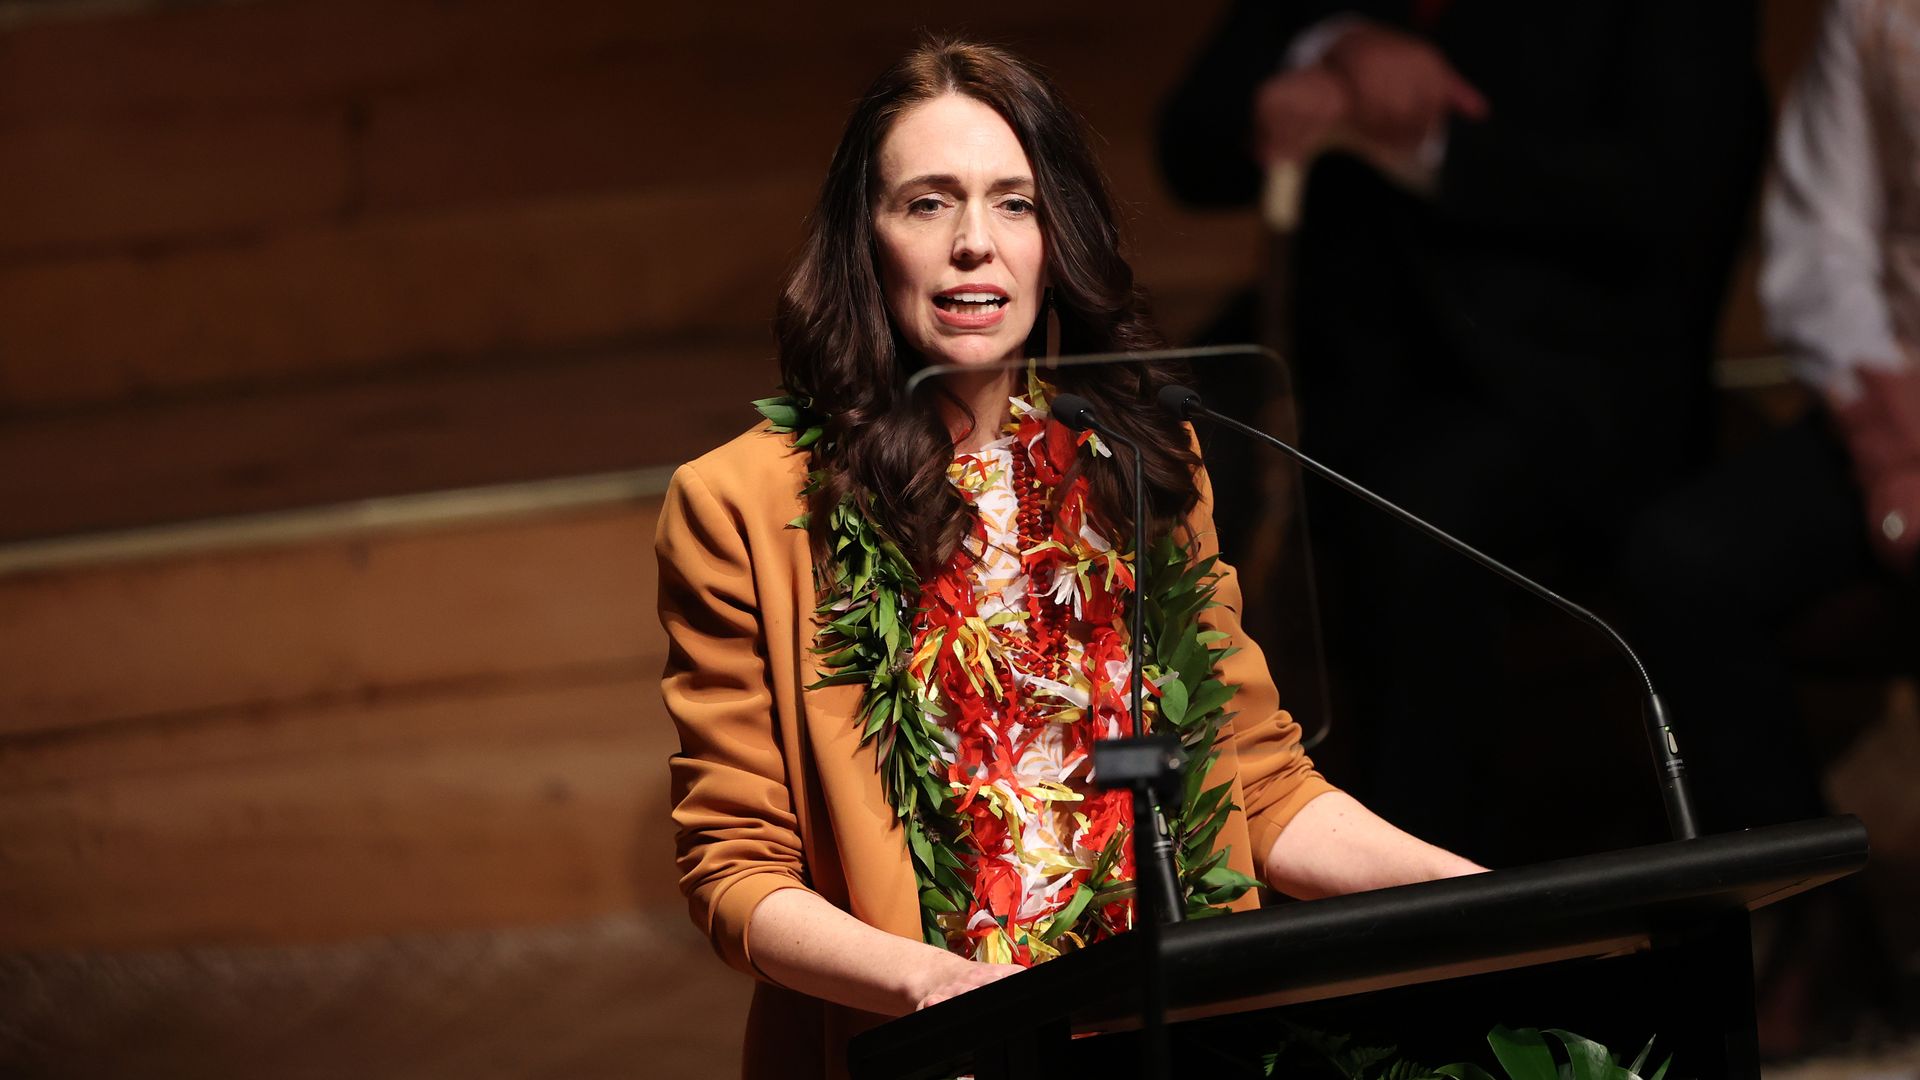 Jacinda Arden, with traditional wreaths around her neck, speaks at a podium